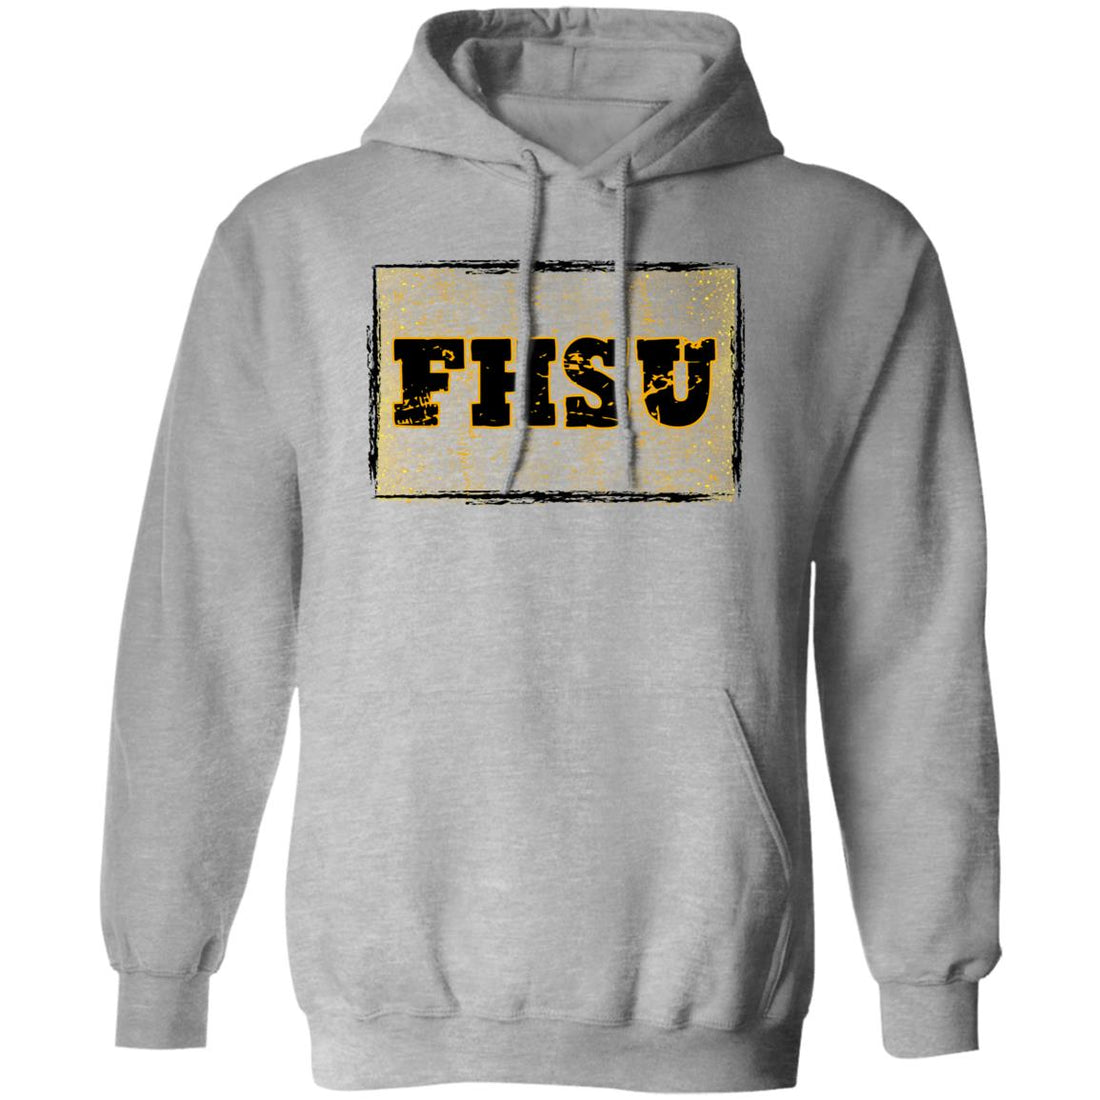 FHSU Vintage Pullover Hoodie - Sweatshirts - Positively Sassy - FHSU Vintage Pullover Hoodie